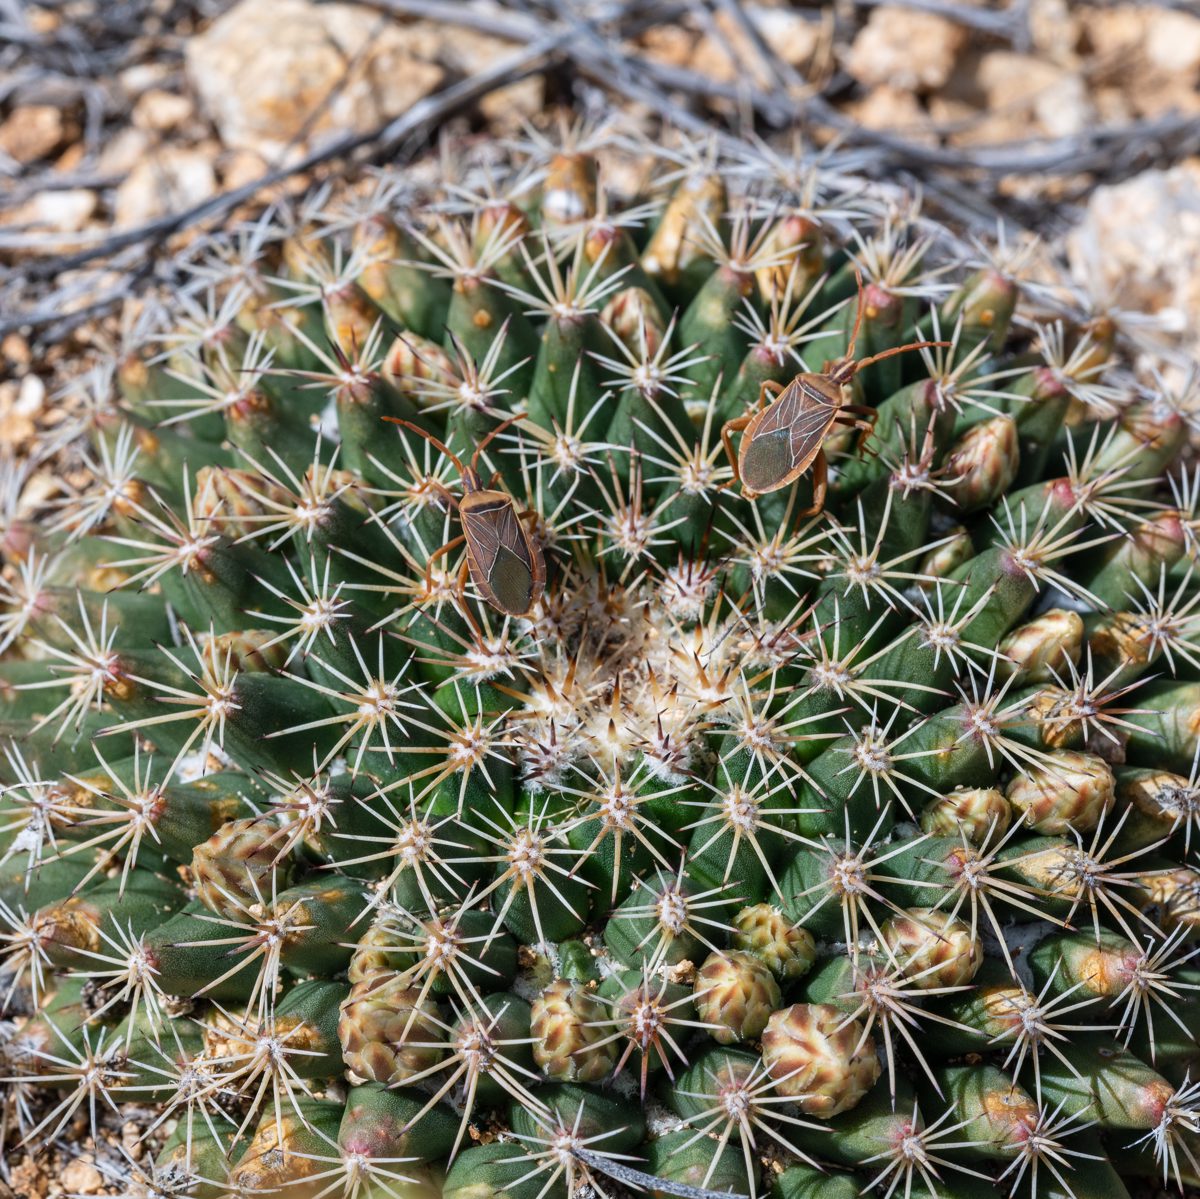 2020 March MacDougals Cactus